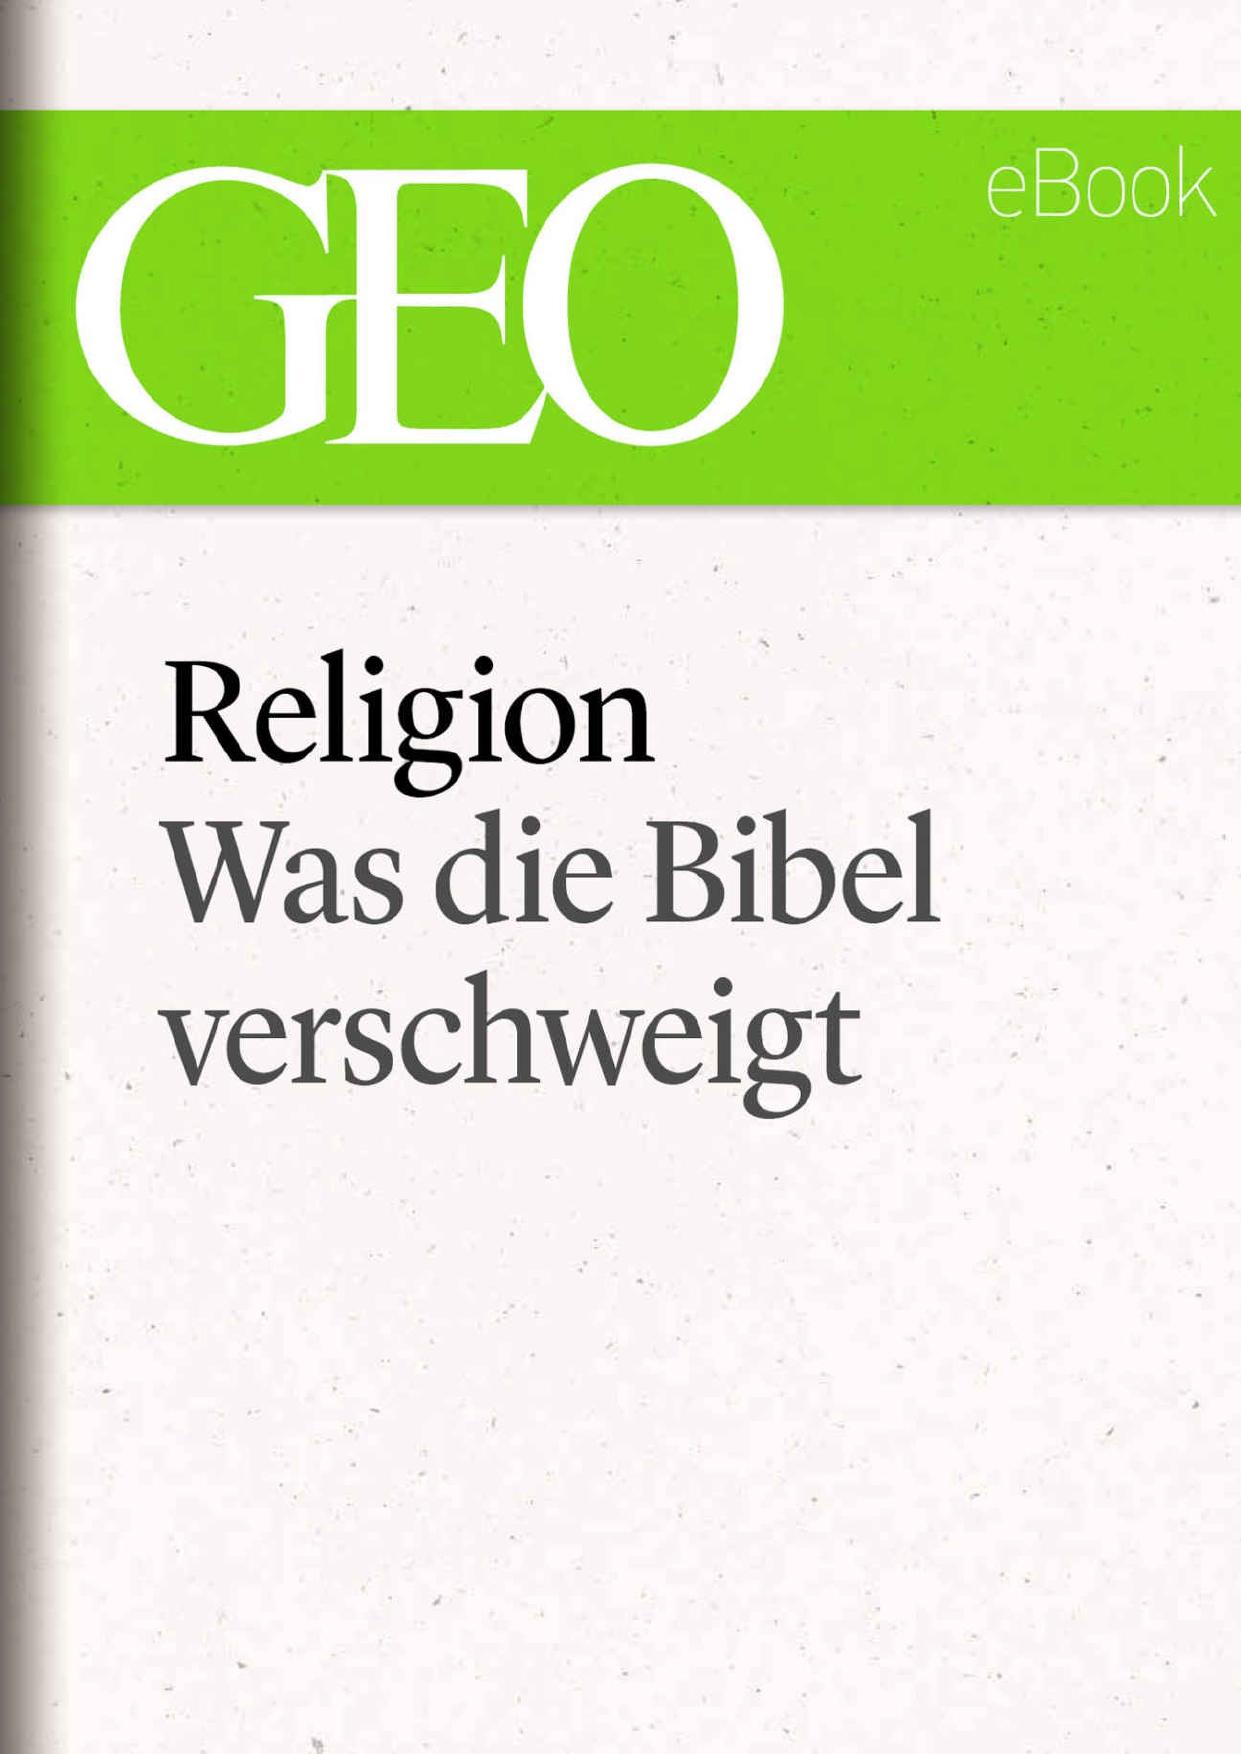 Religion: Was die Bibel verschweigt (GEO eBook Single) (German Edition)